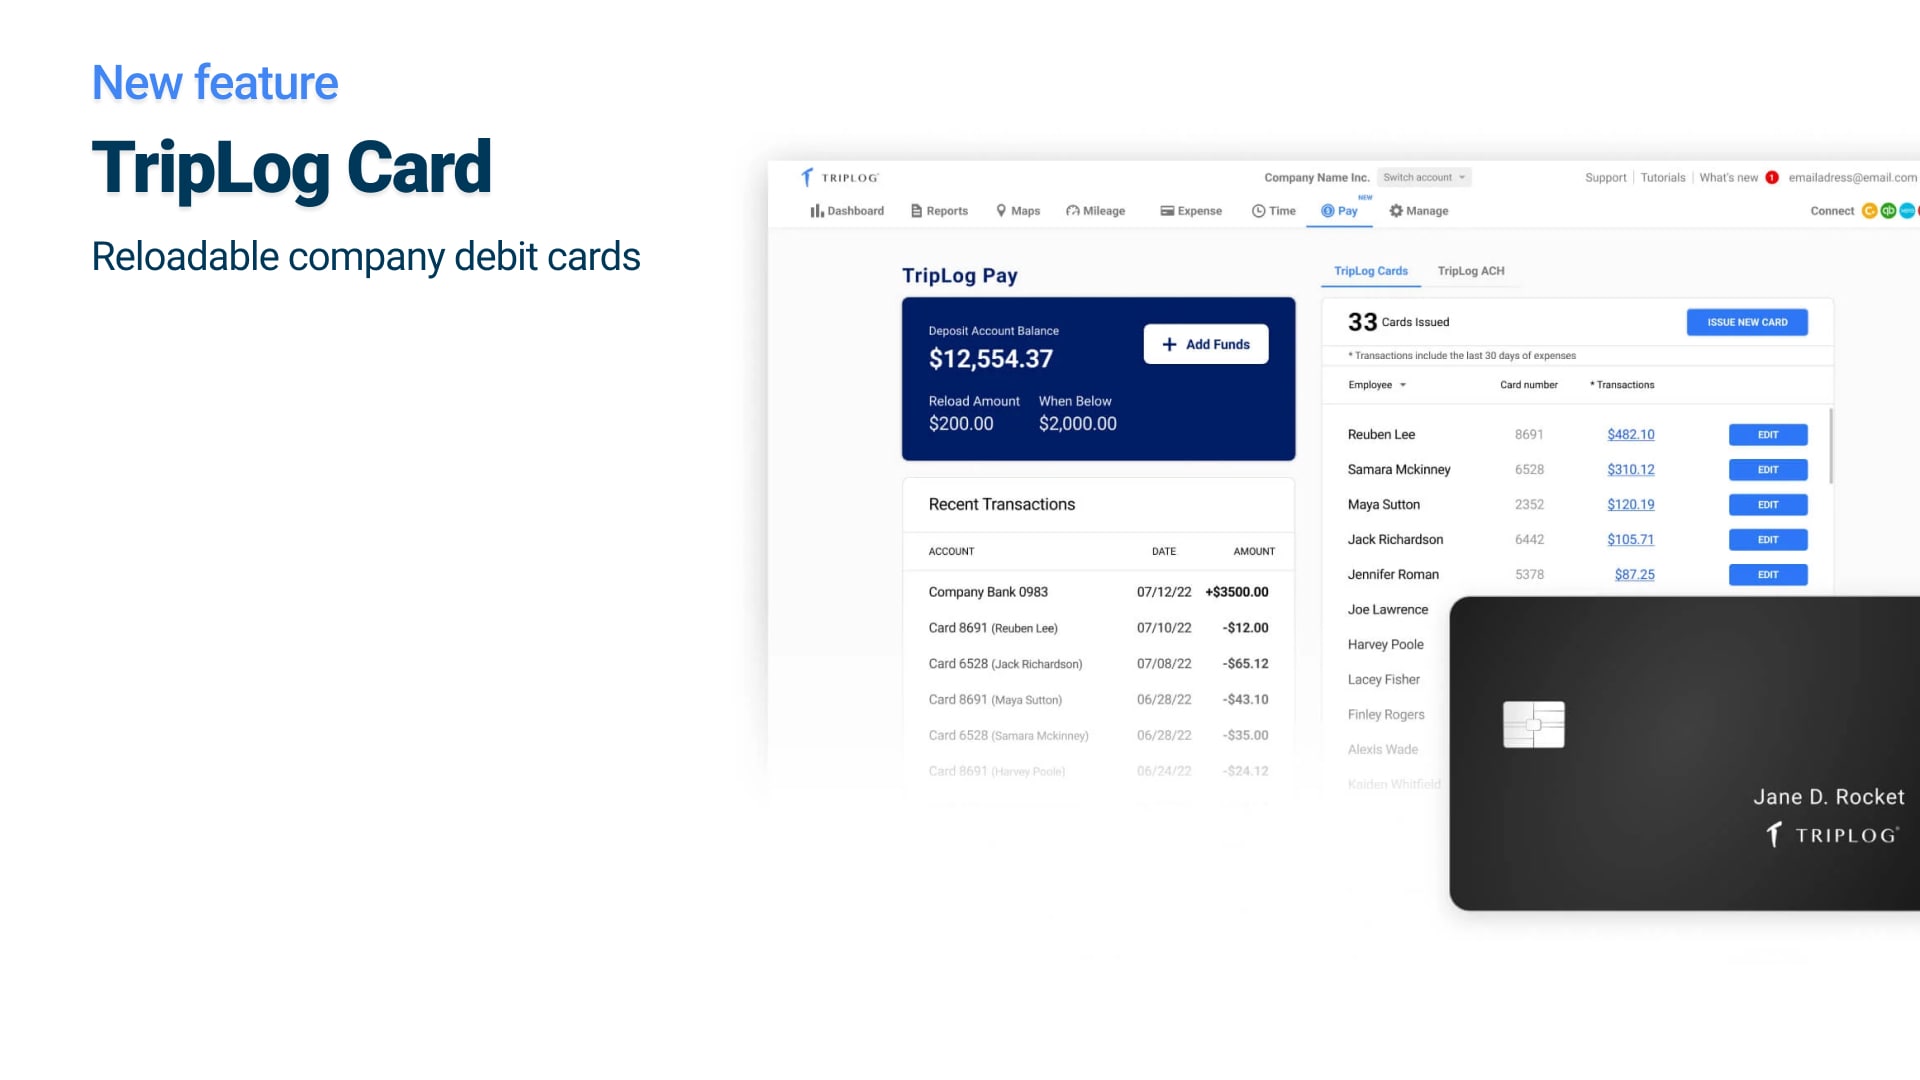 TripLog Card: Reloadable Company Debit Cards